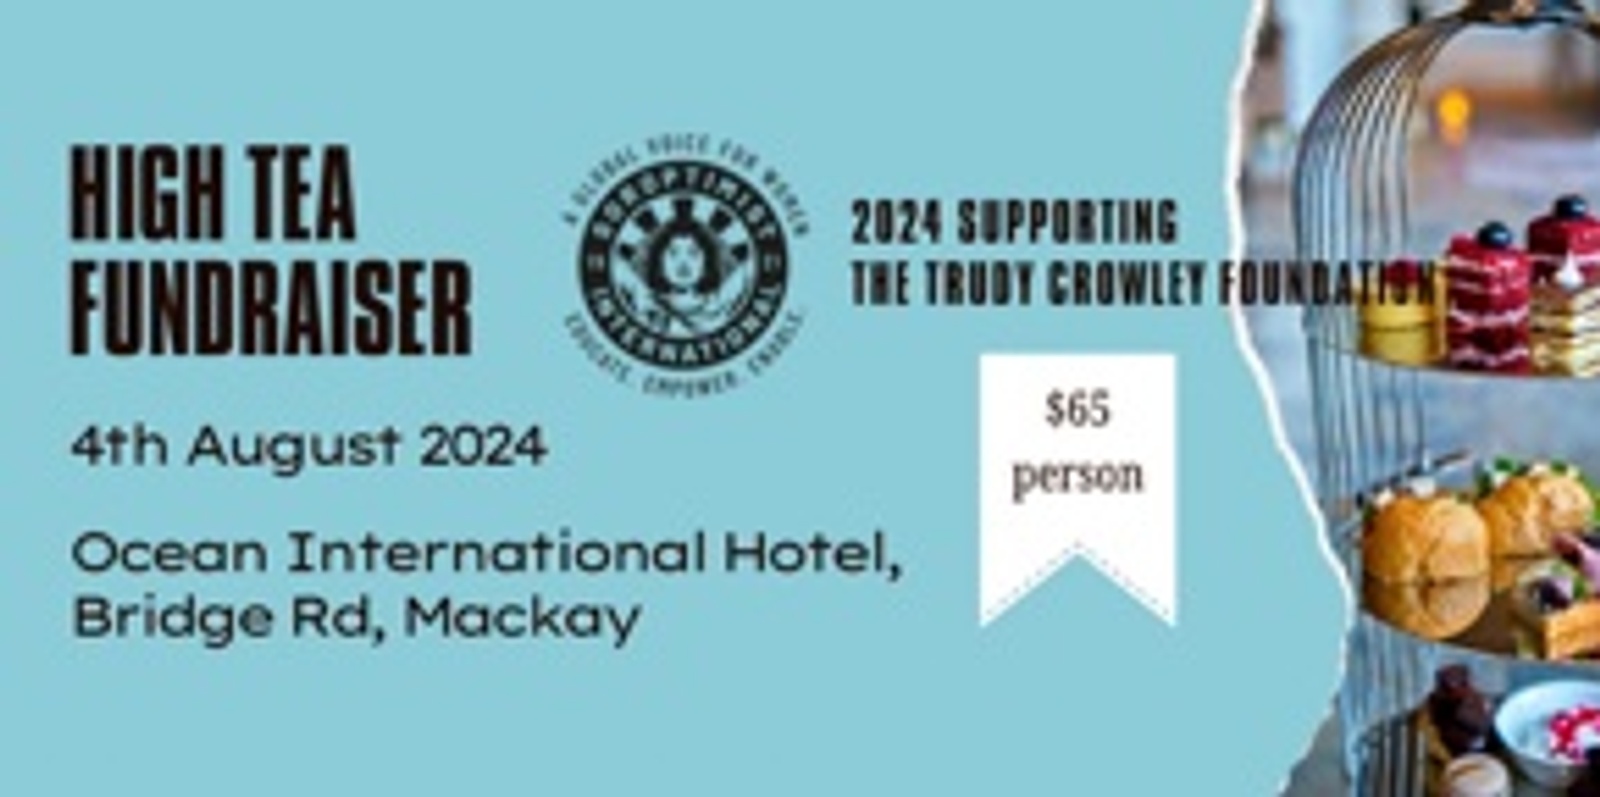 Banner image for Soroptimist International Mackay High Tea Fundraiser for Trudy Crowley Foundation